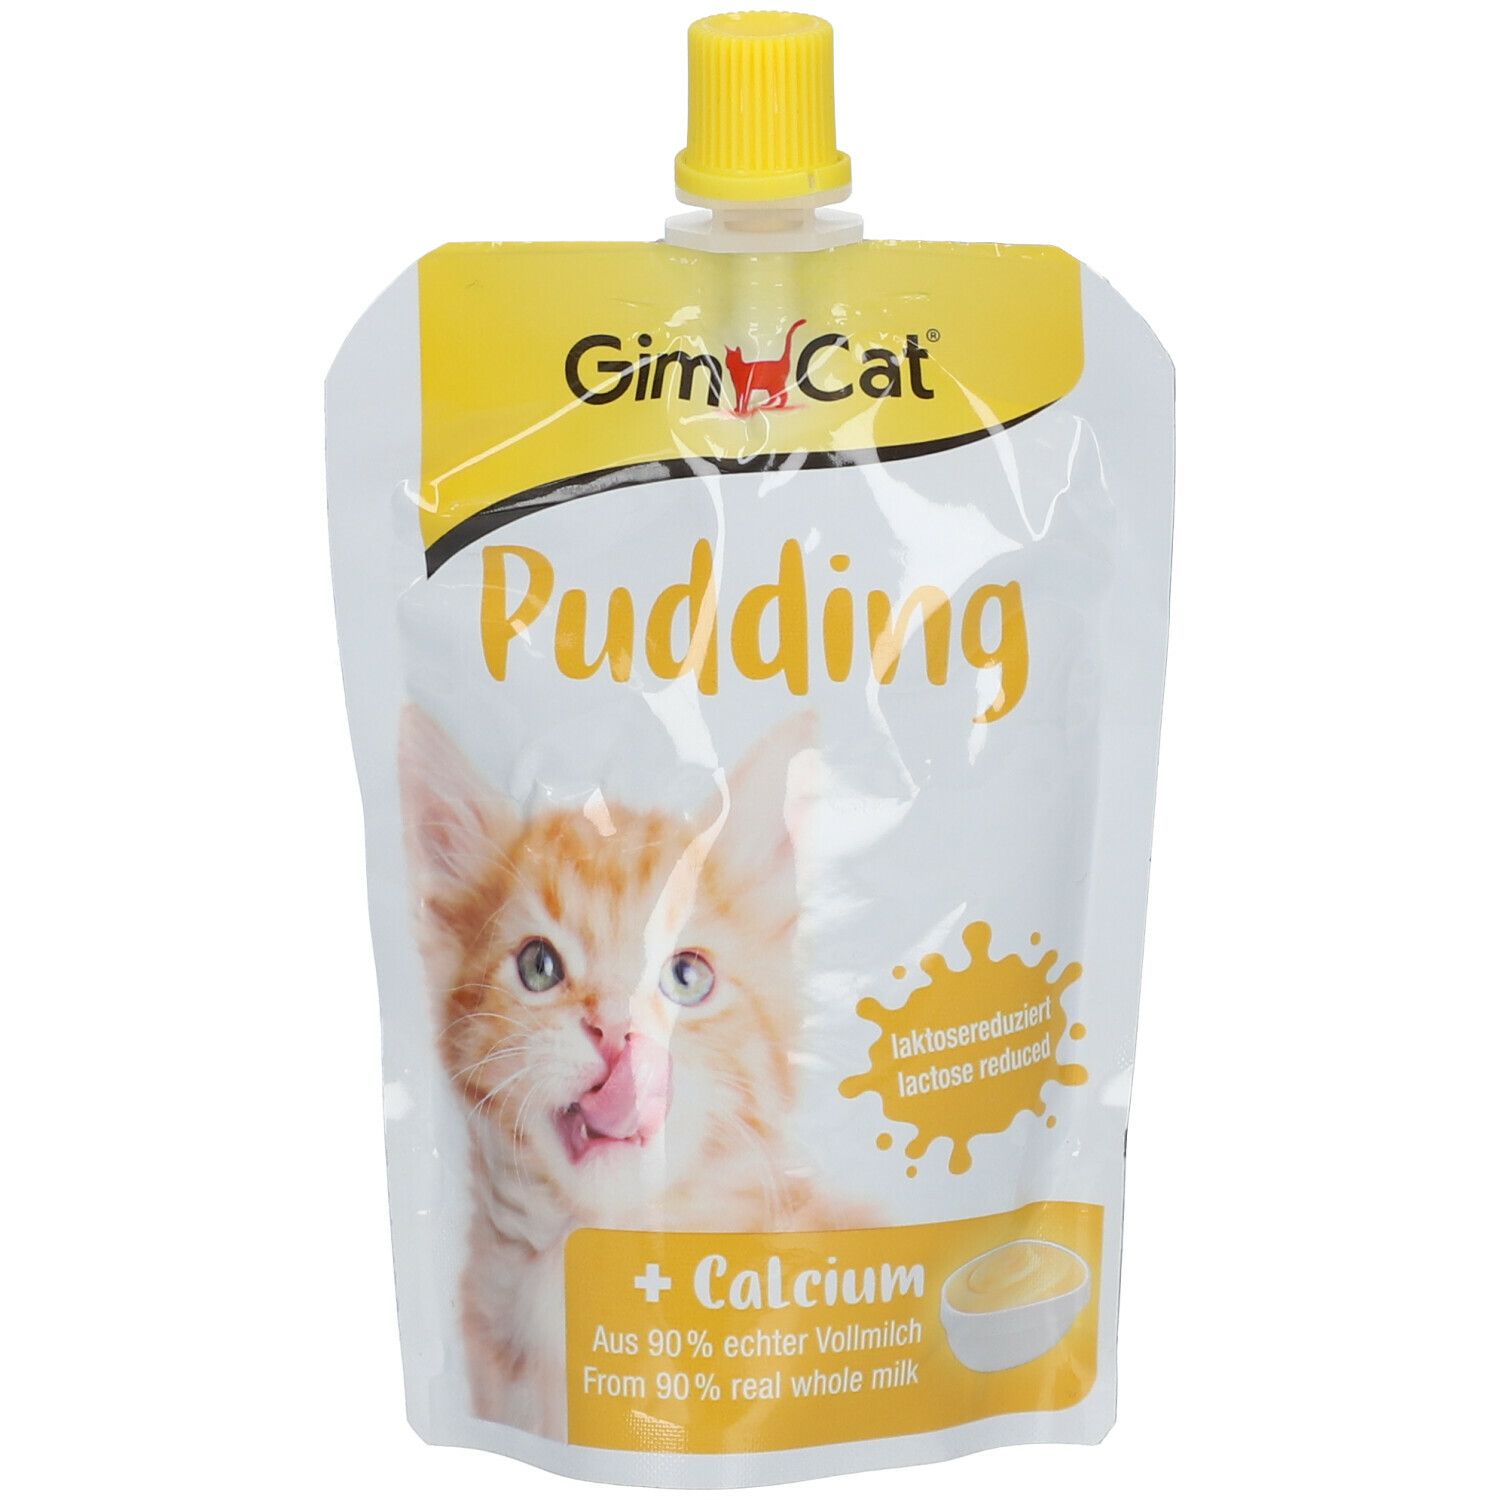 GimCat® Pudding classic